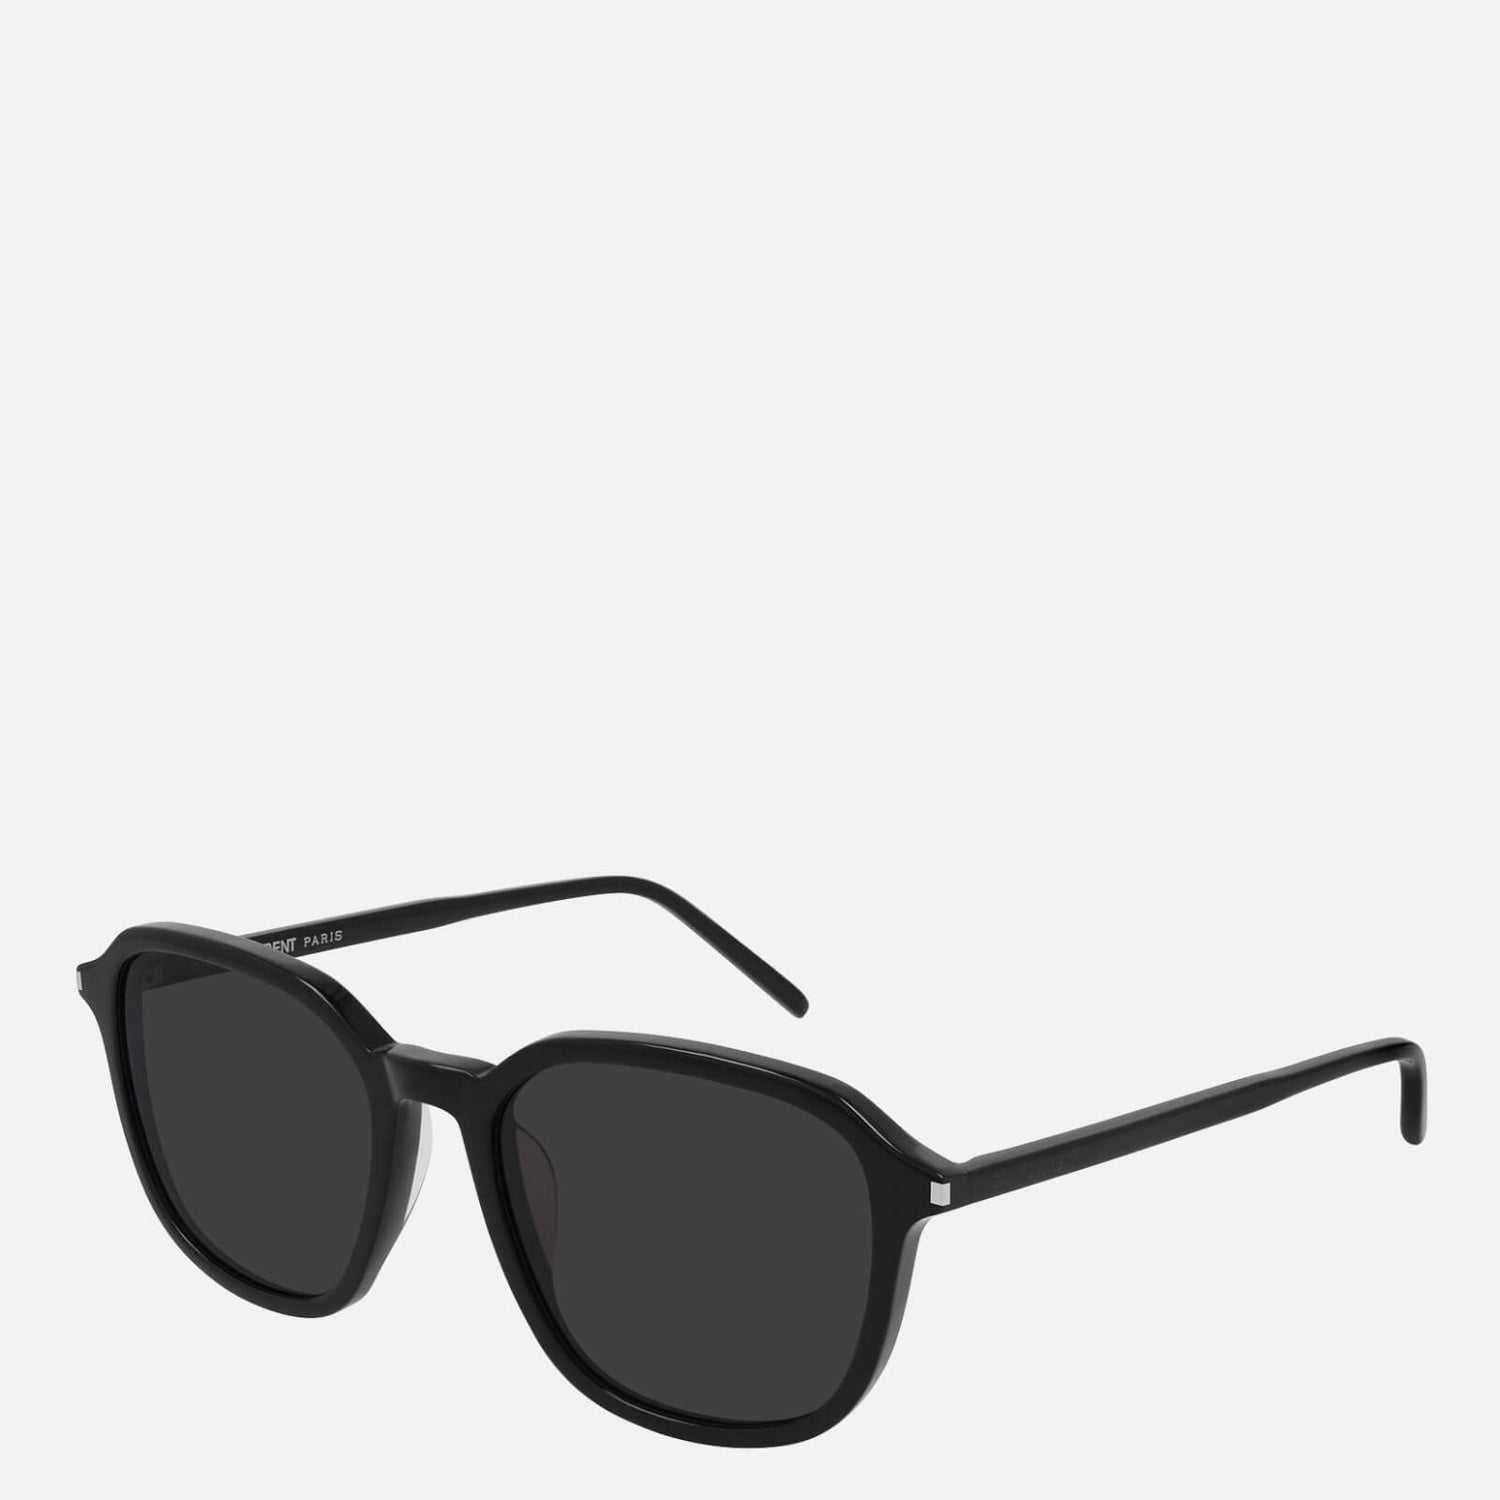 Saint Laurent Women's Acetate Sunglasses - Black